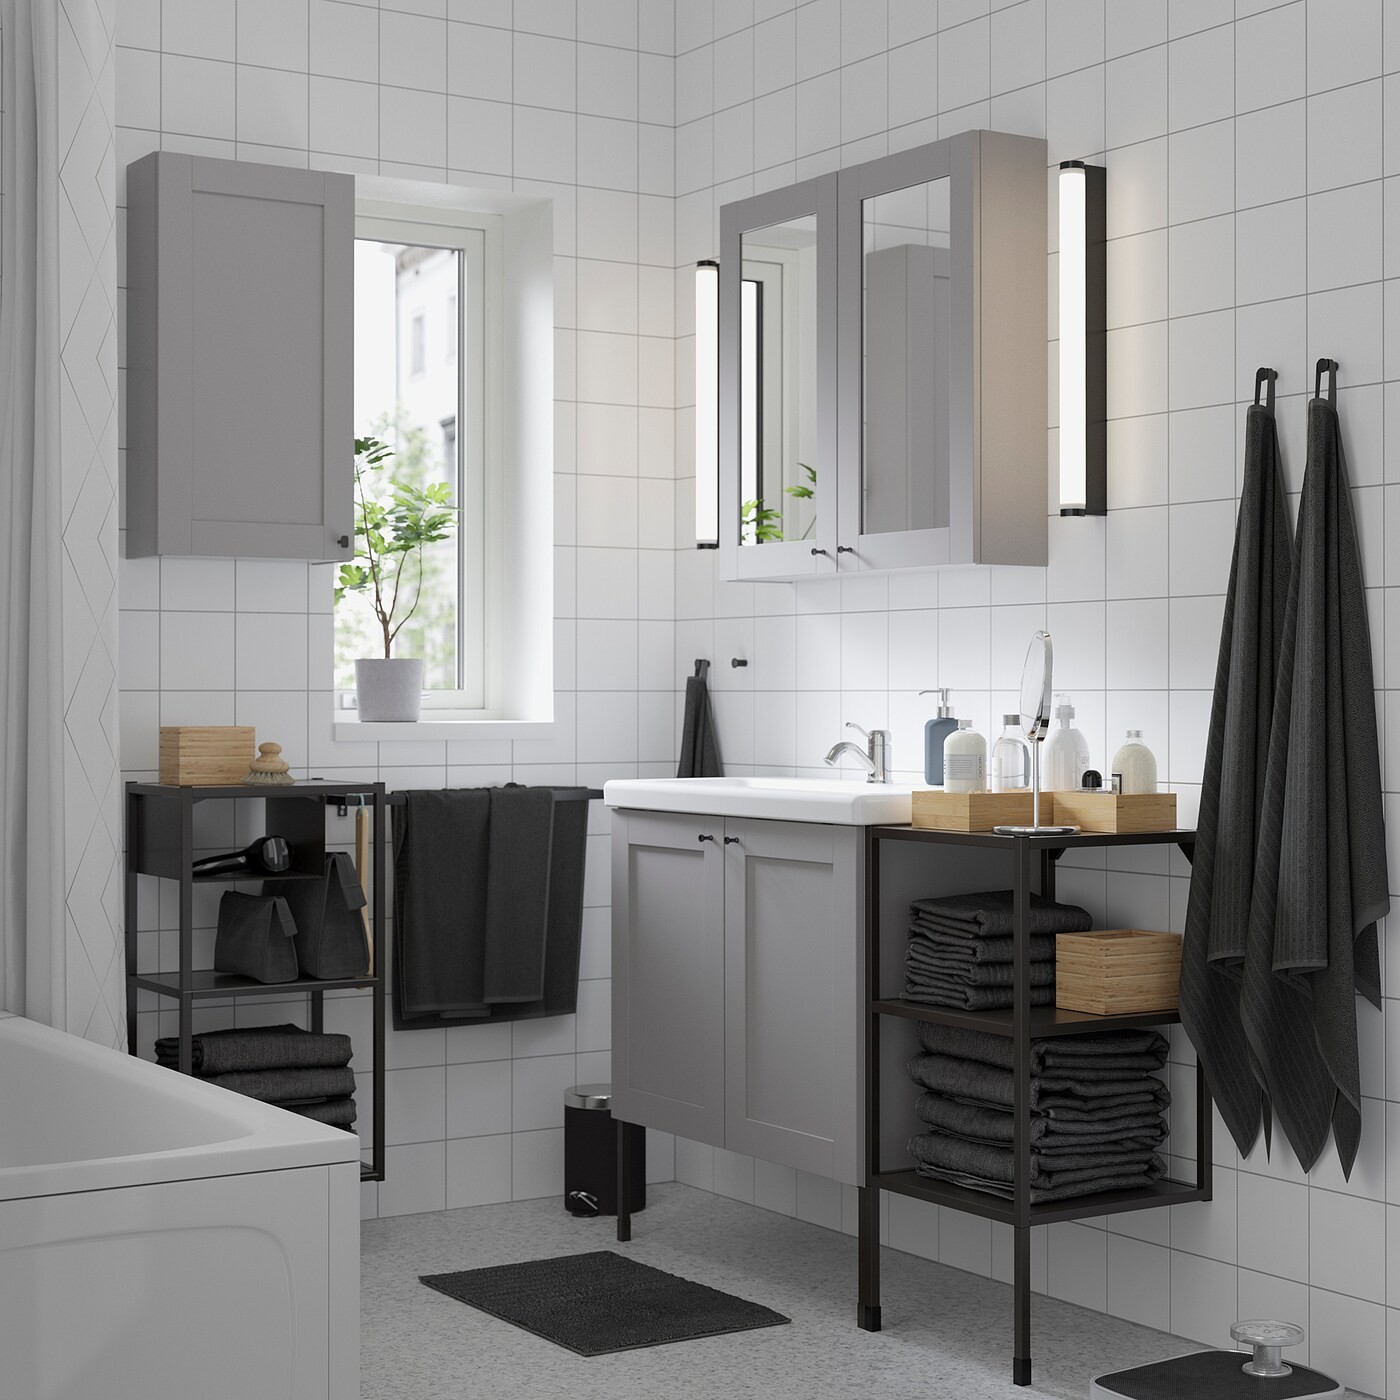 ENHET / TVÄLLEN Bathroom furniture, set of 14